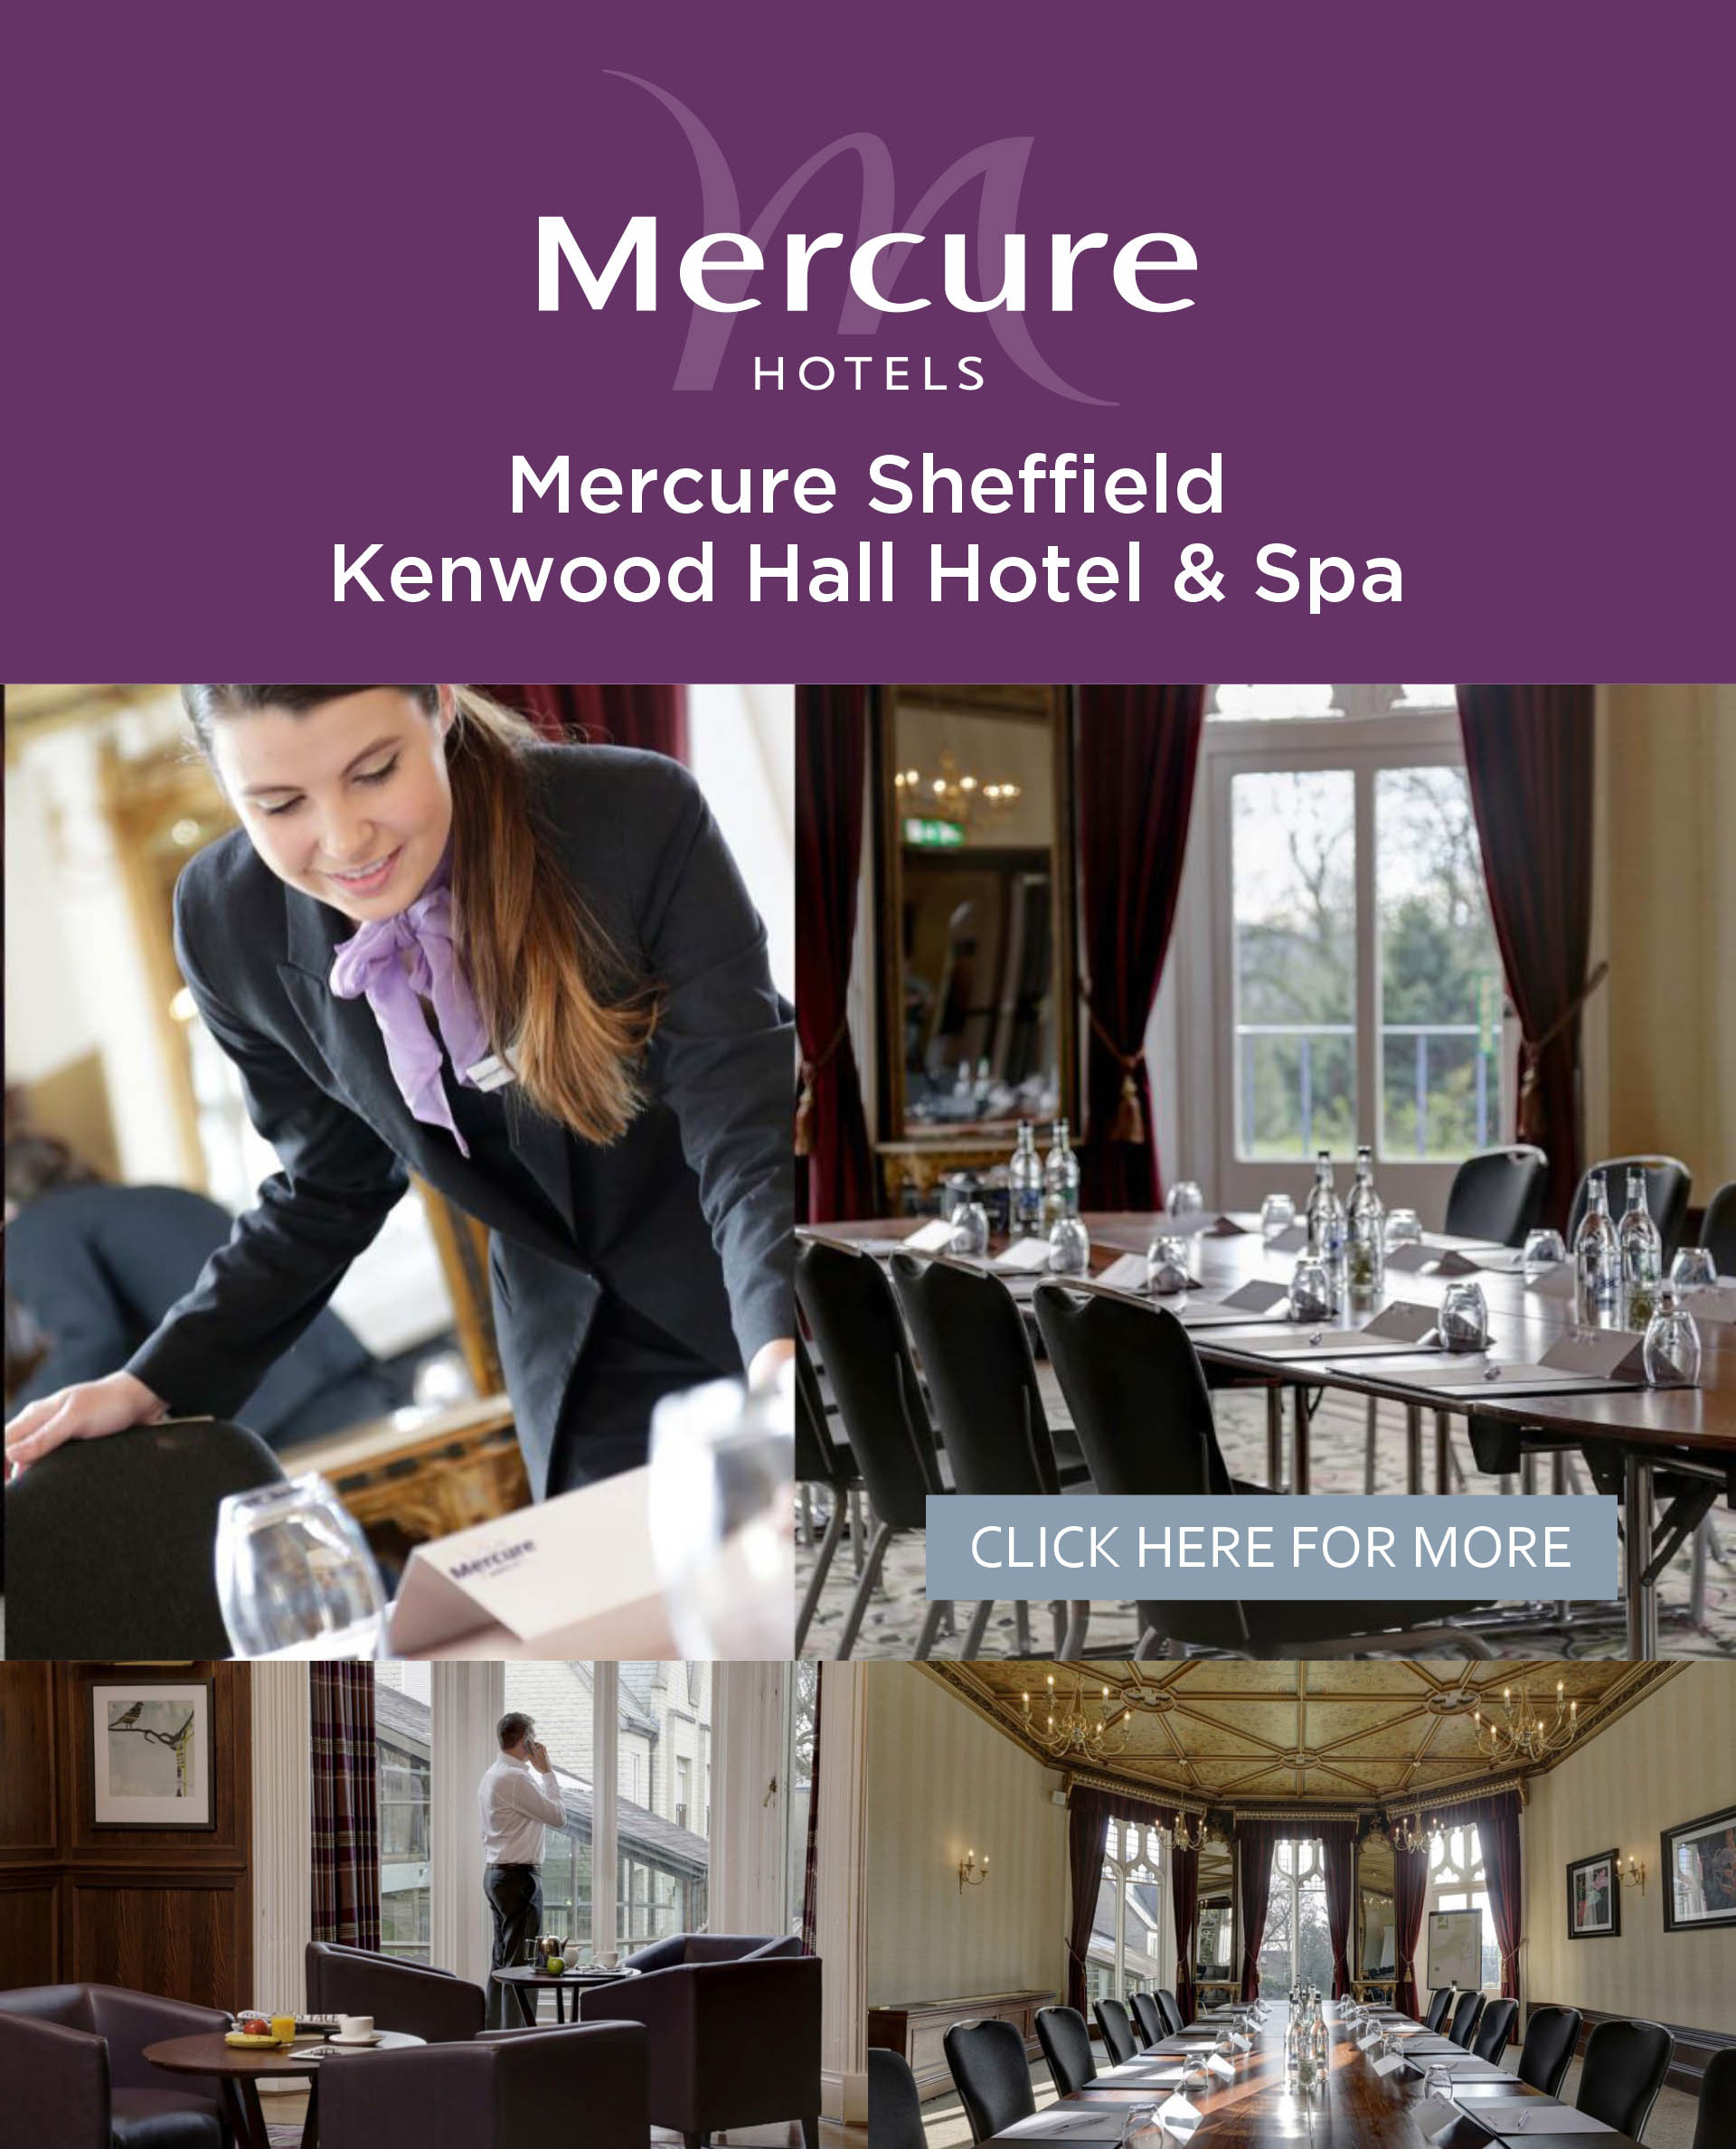 Kenwood Hall Hotel & Spa meeting image